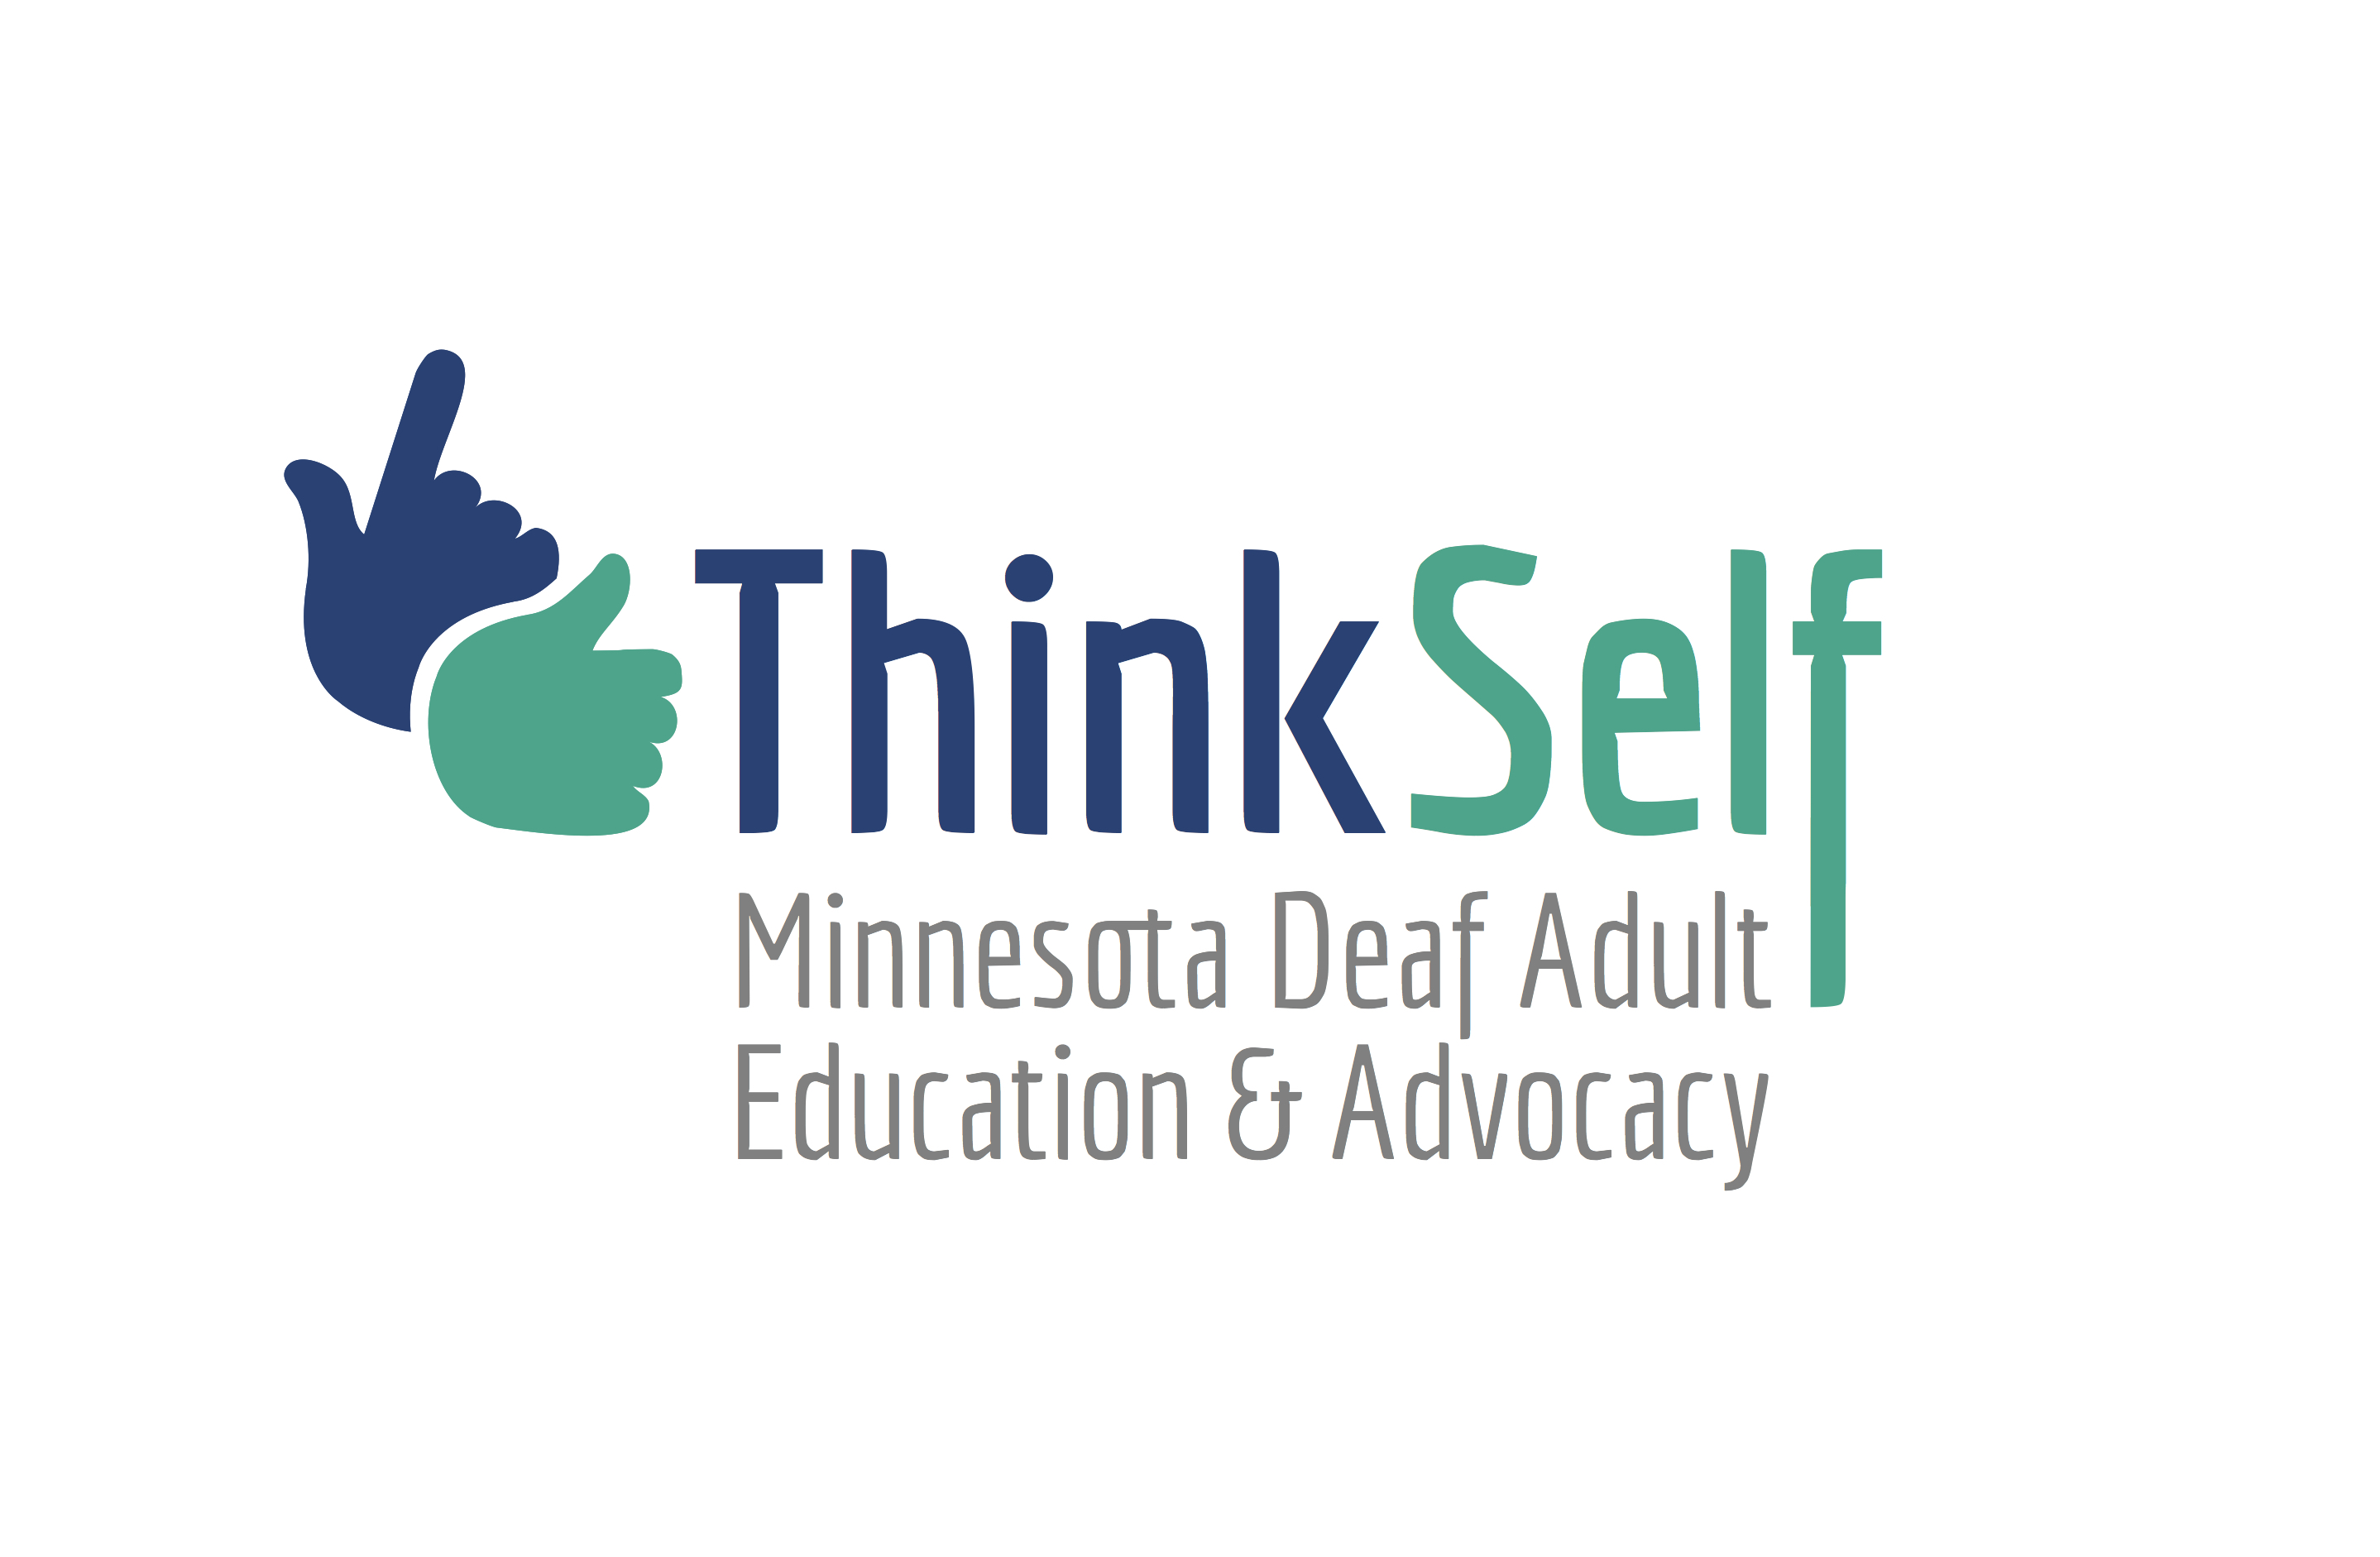 ThinkSelf logo